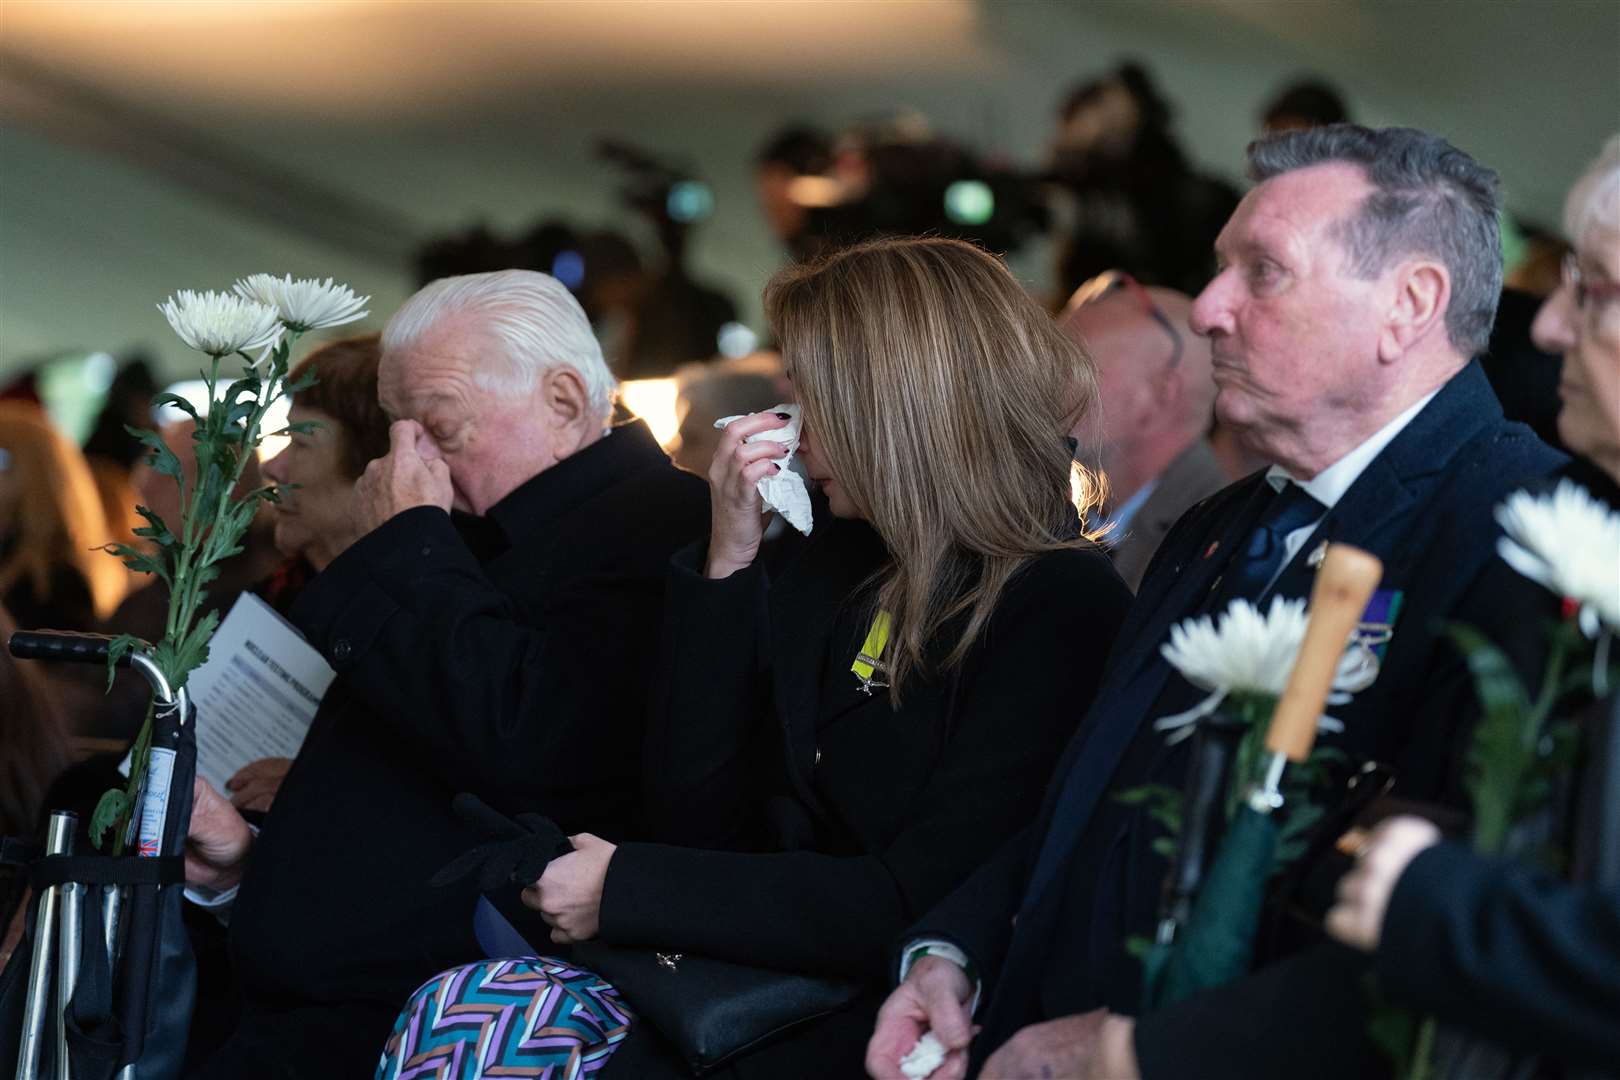 Laura Morris (centre), whose grandfather John Morris is an atom bomb test veteran reacts to the medal announcement, alongside veterans Ed McGrath (left) and Eric Barton (right) (Joe Giddens/PA)